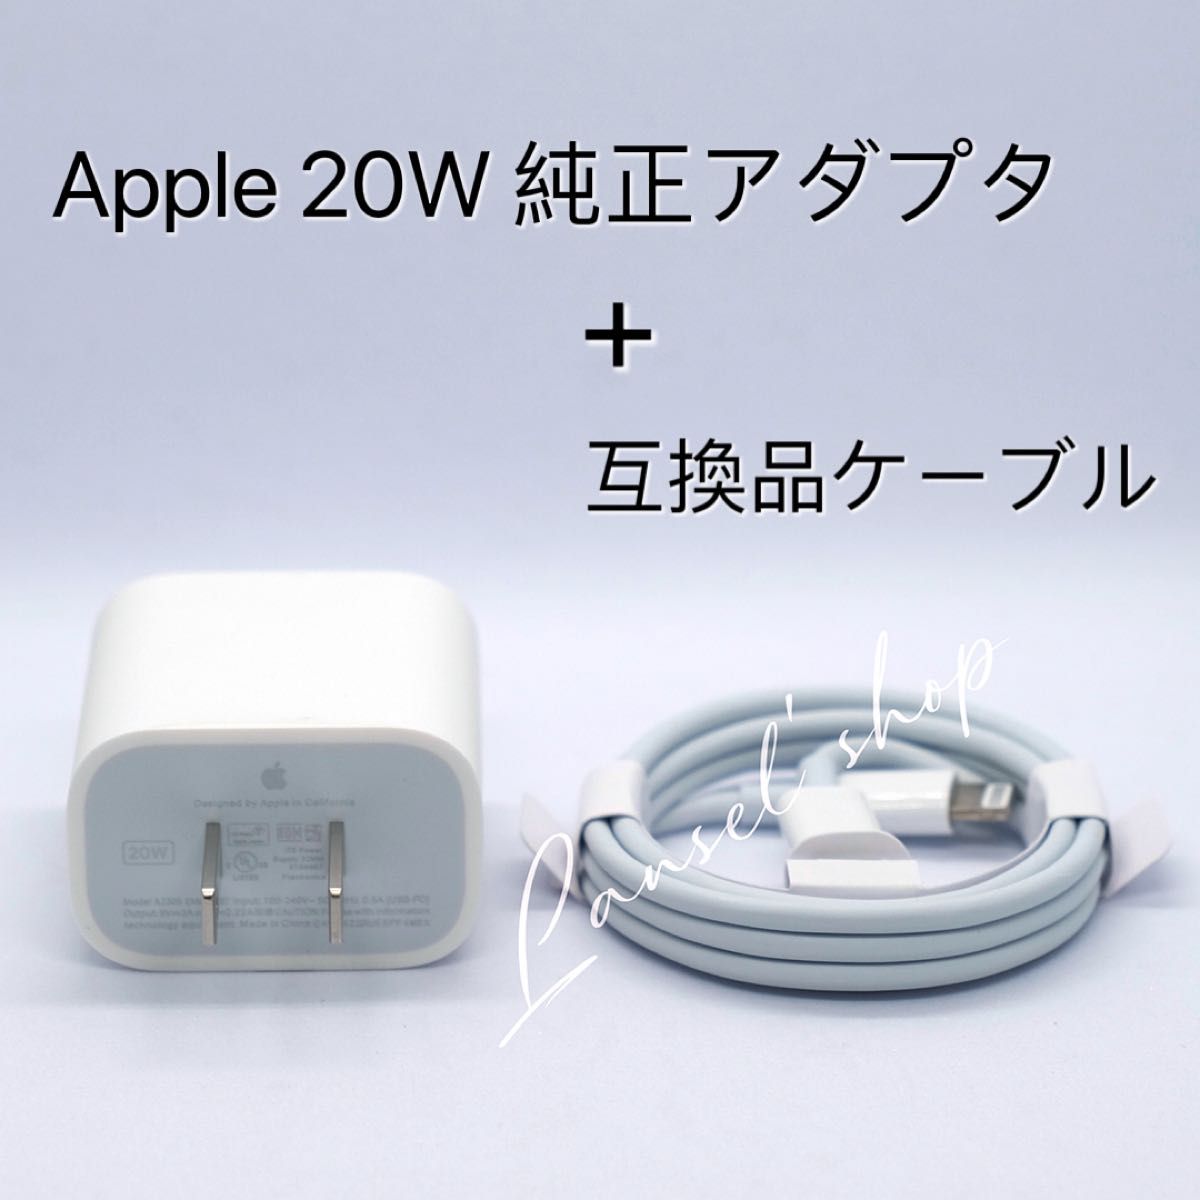 Apple 純正 20W USB-C電源アダプタ 充電器 iphone ipad 未使用 新品 箱なし TypeC タイプC &c